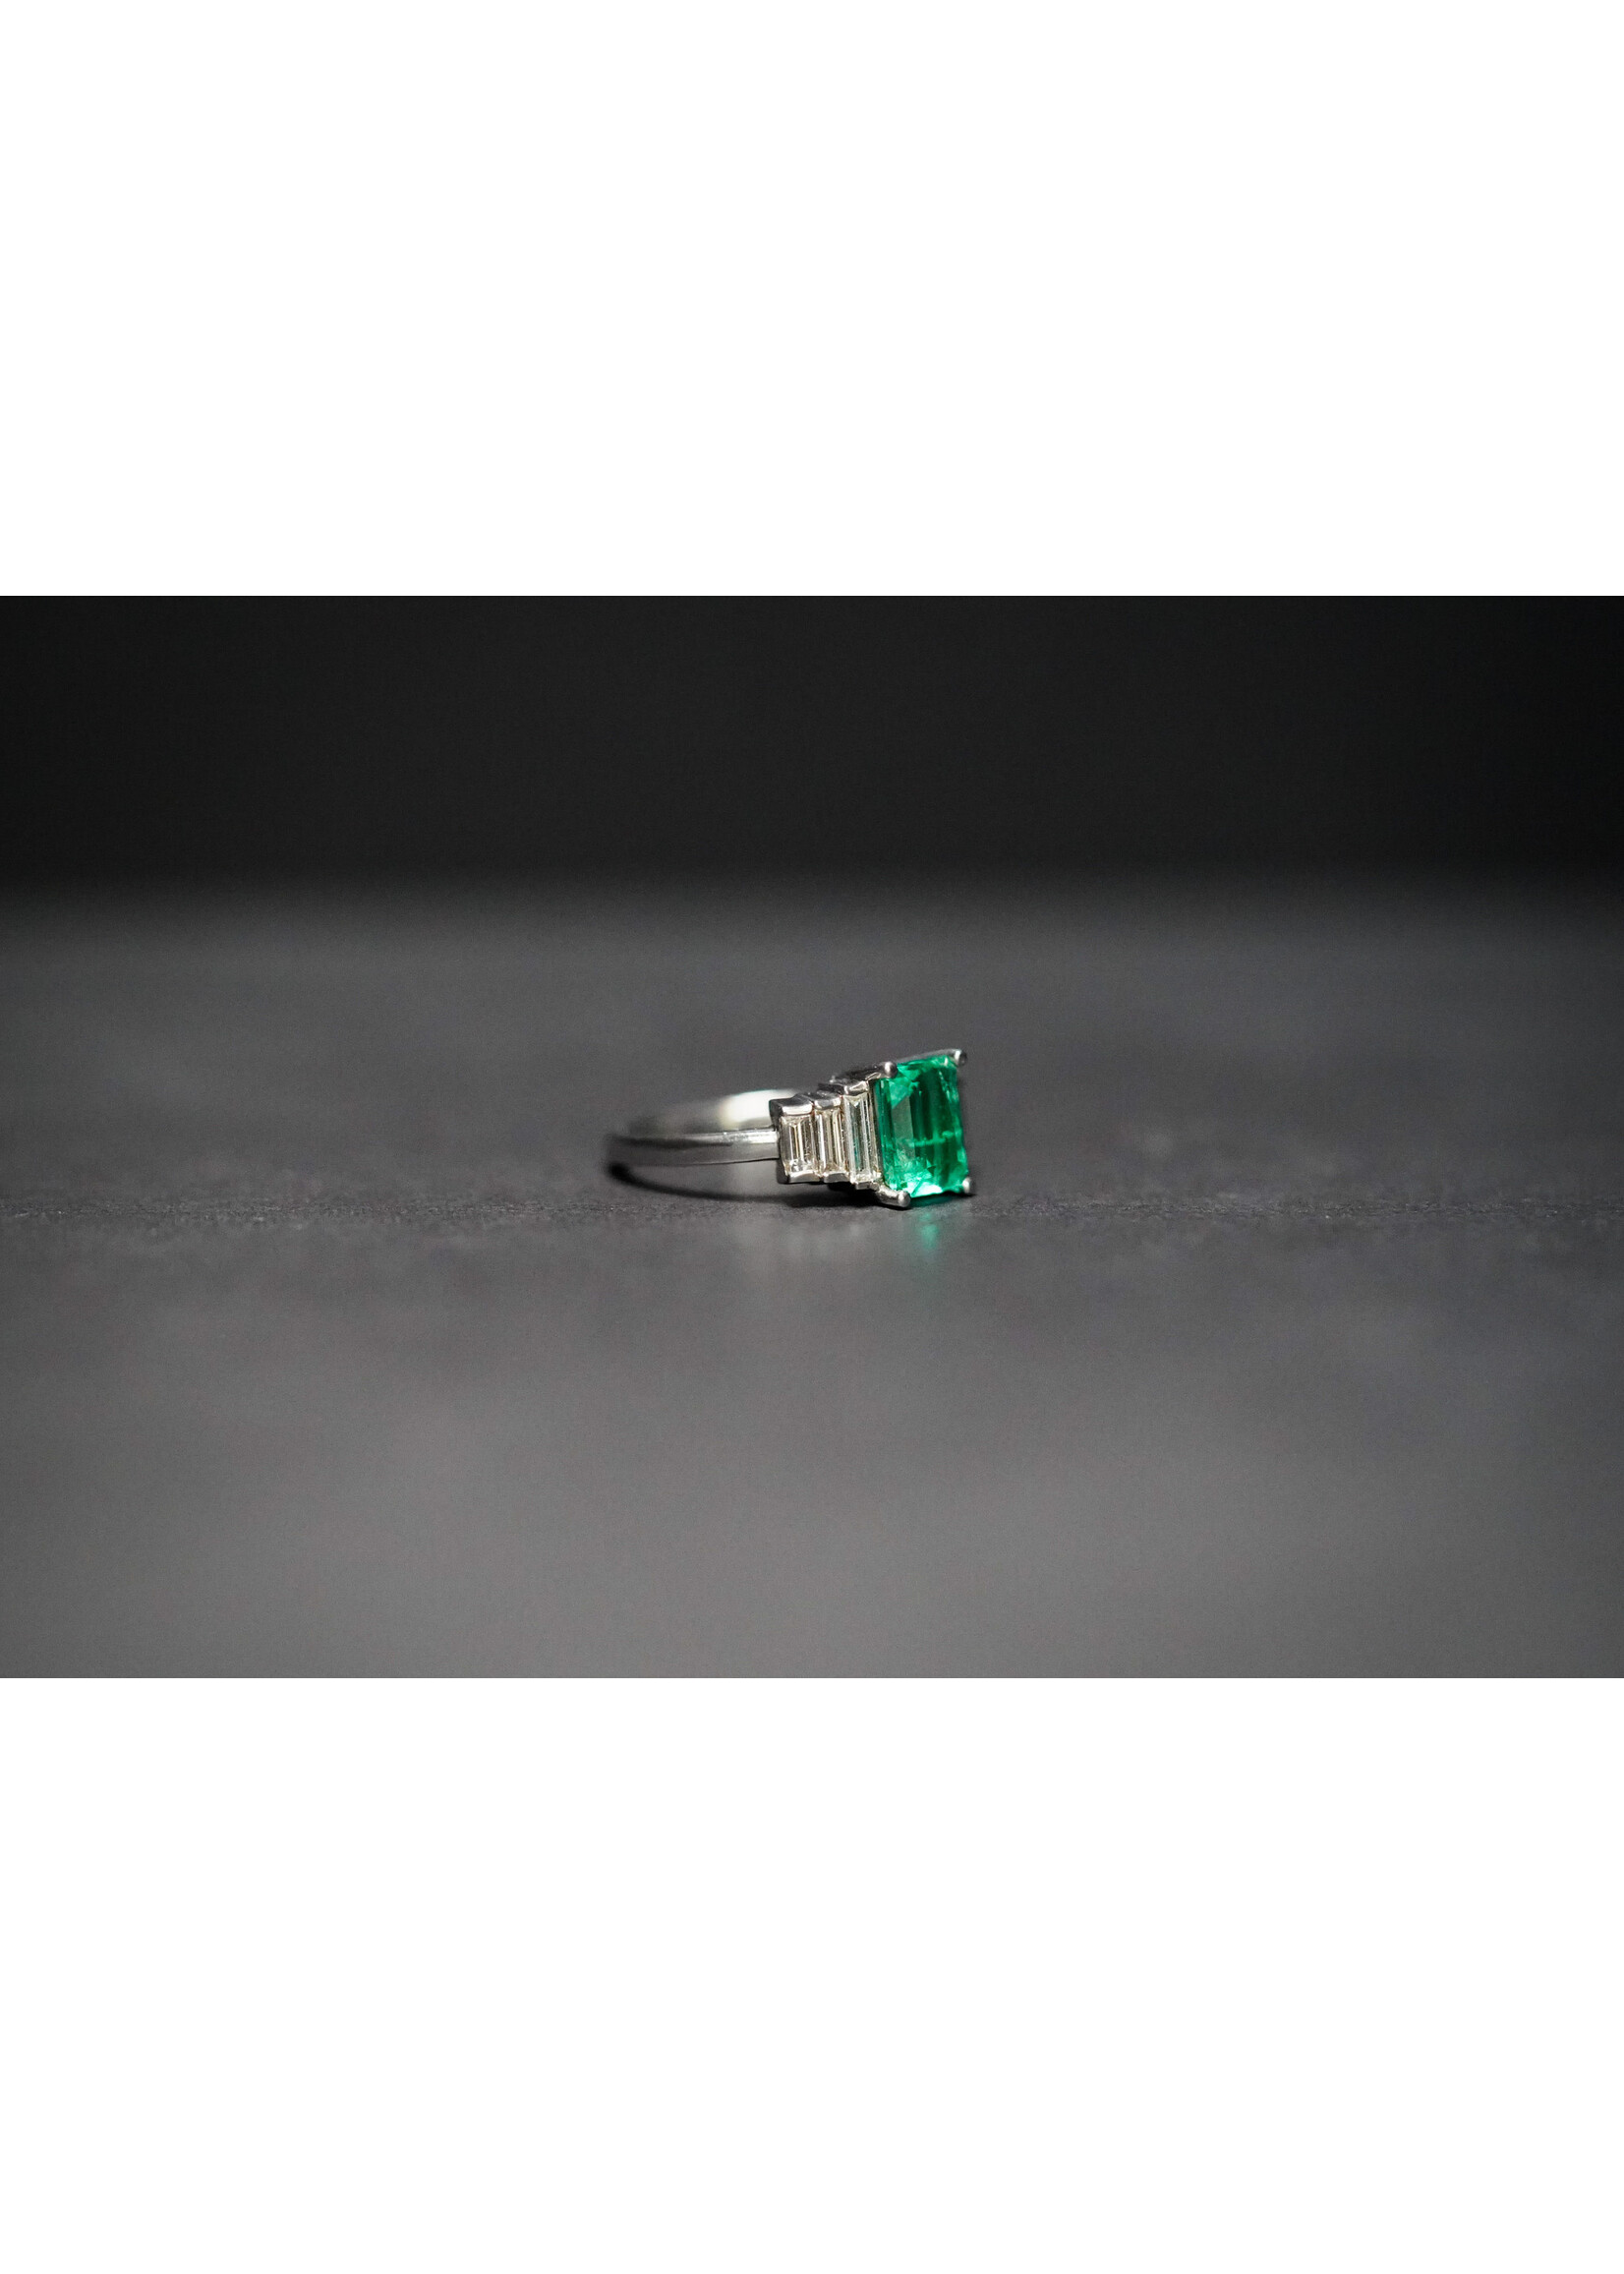 14KW 3.56g 2.31ctw (1.71ctr) Emerald & Diamond Fashion Ring (size 7)